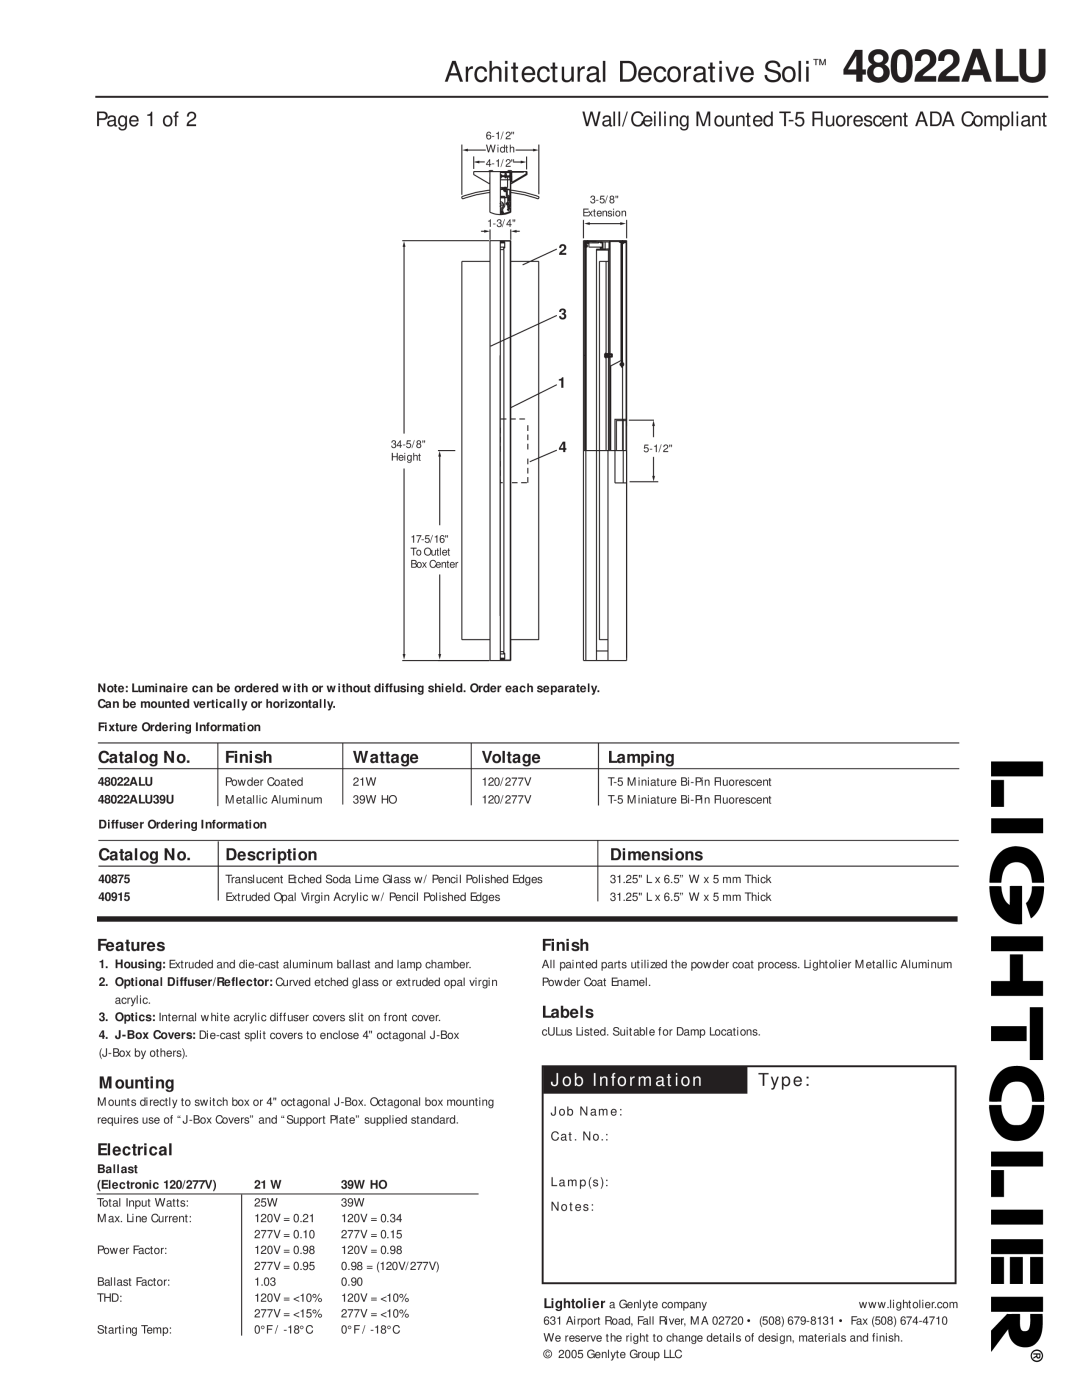 Lightolier dimensions Architectural Decorative Soli 48022ALU, Page 1 of 